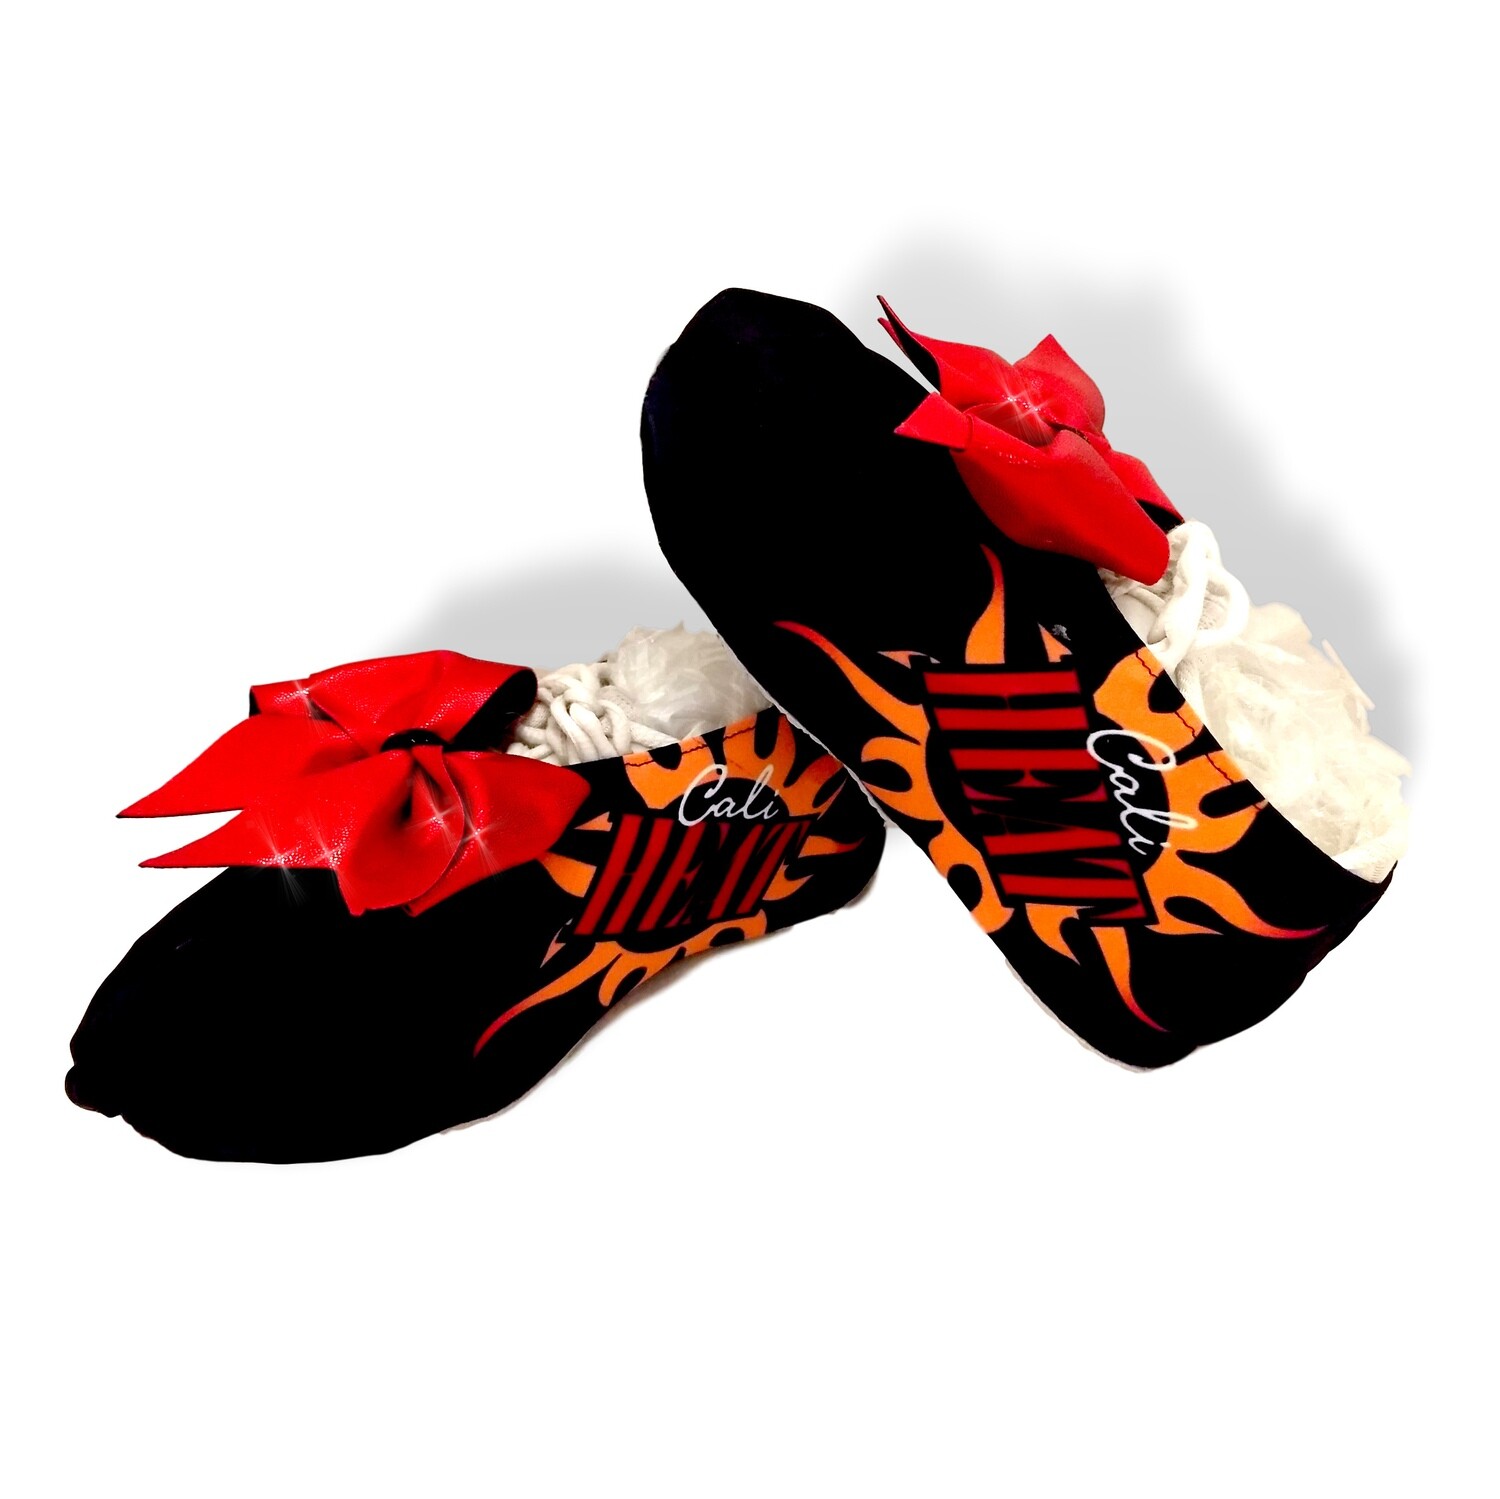 Custom Printed Cheer Shoe Covers 